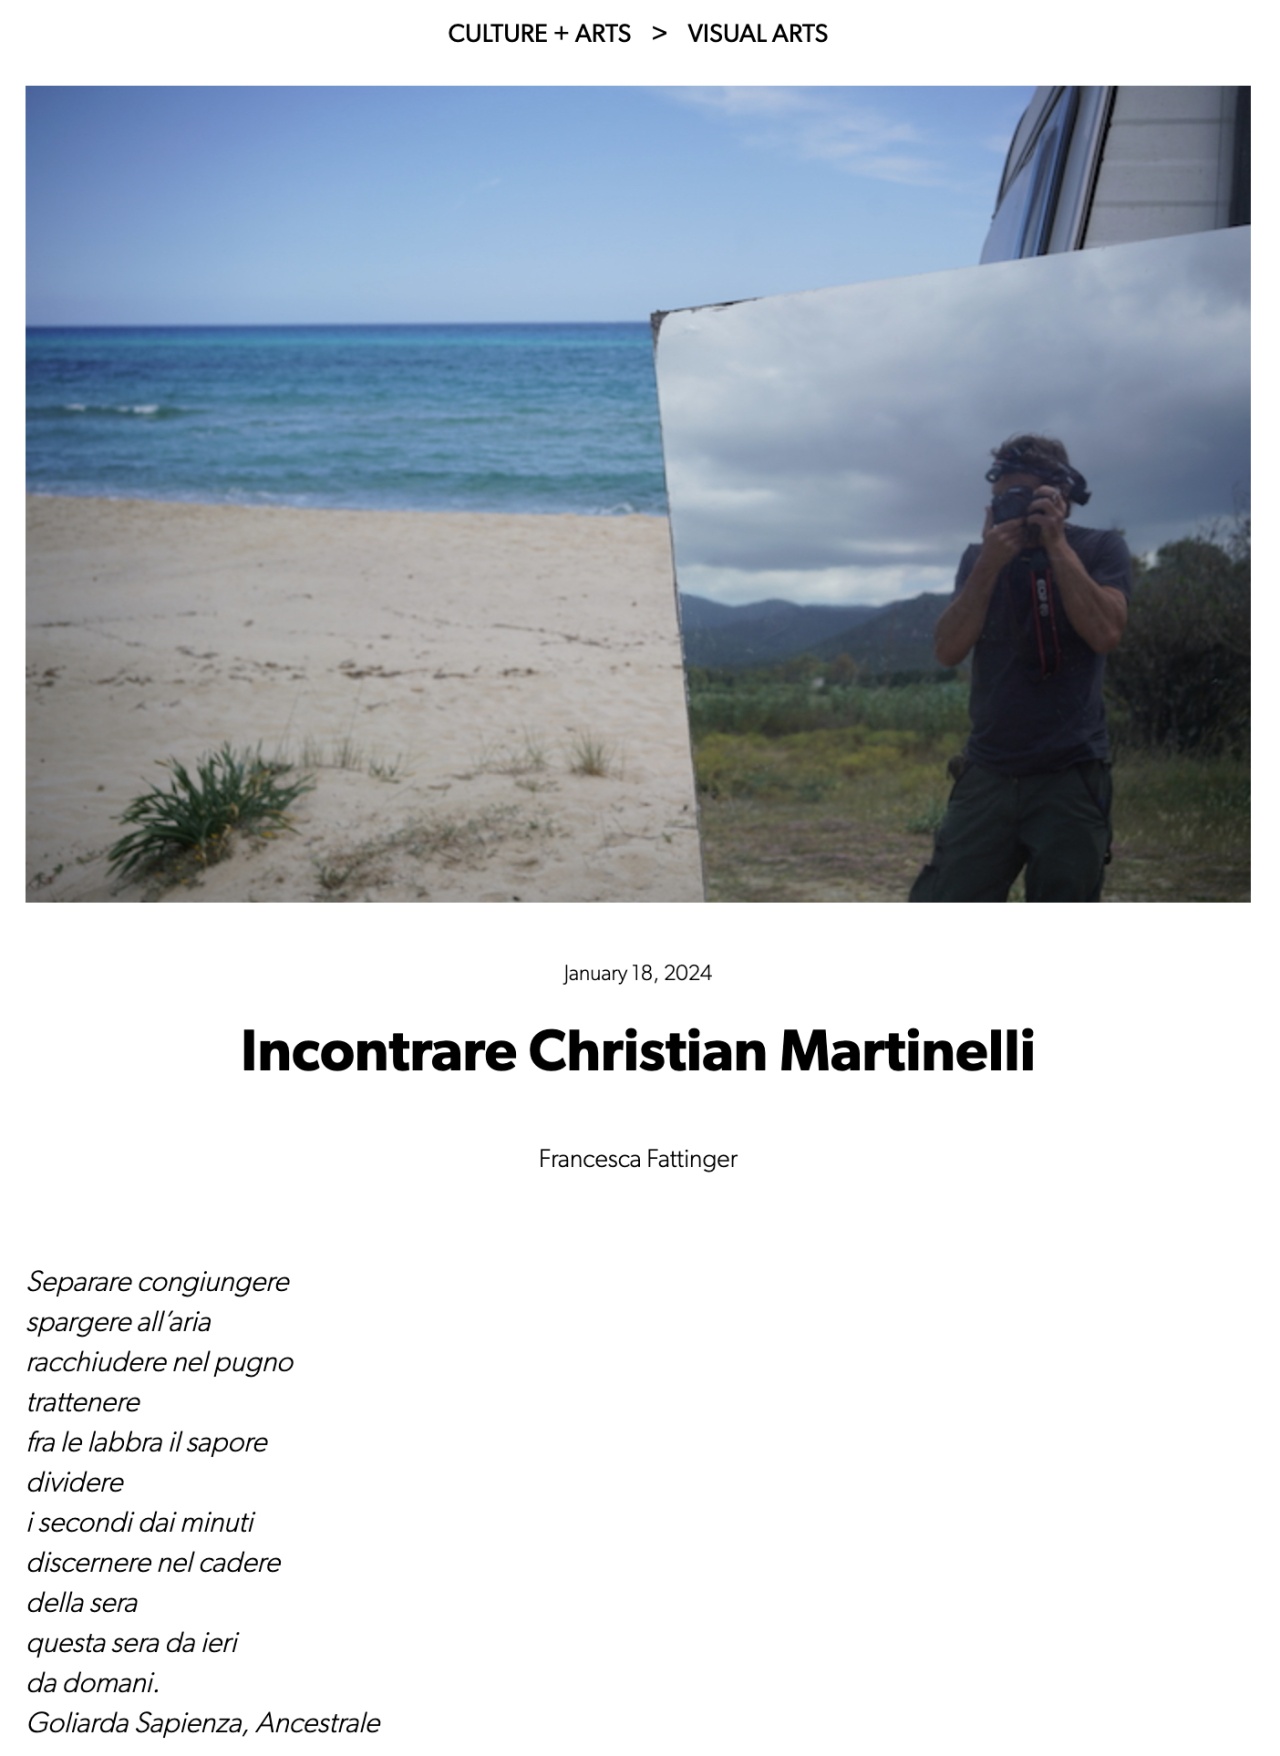 Incontrare_Christian_Martinelli.jpg